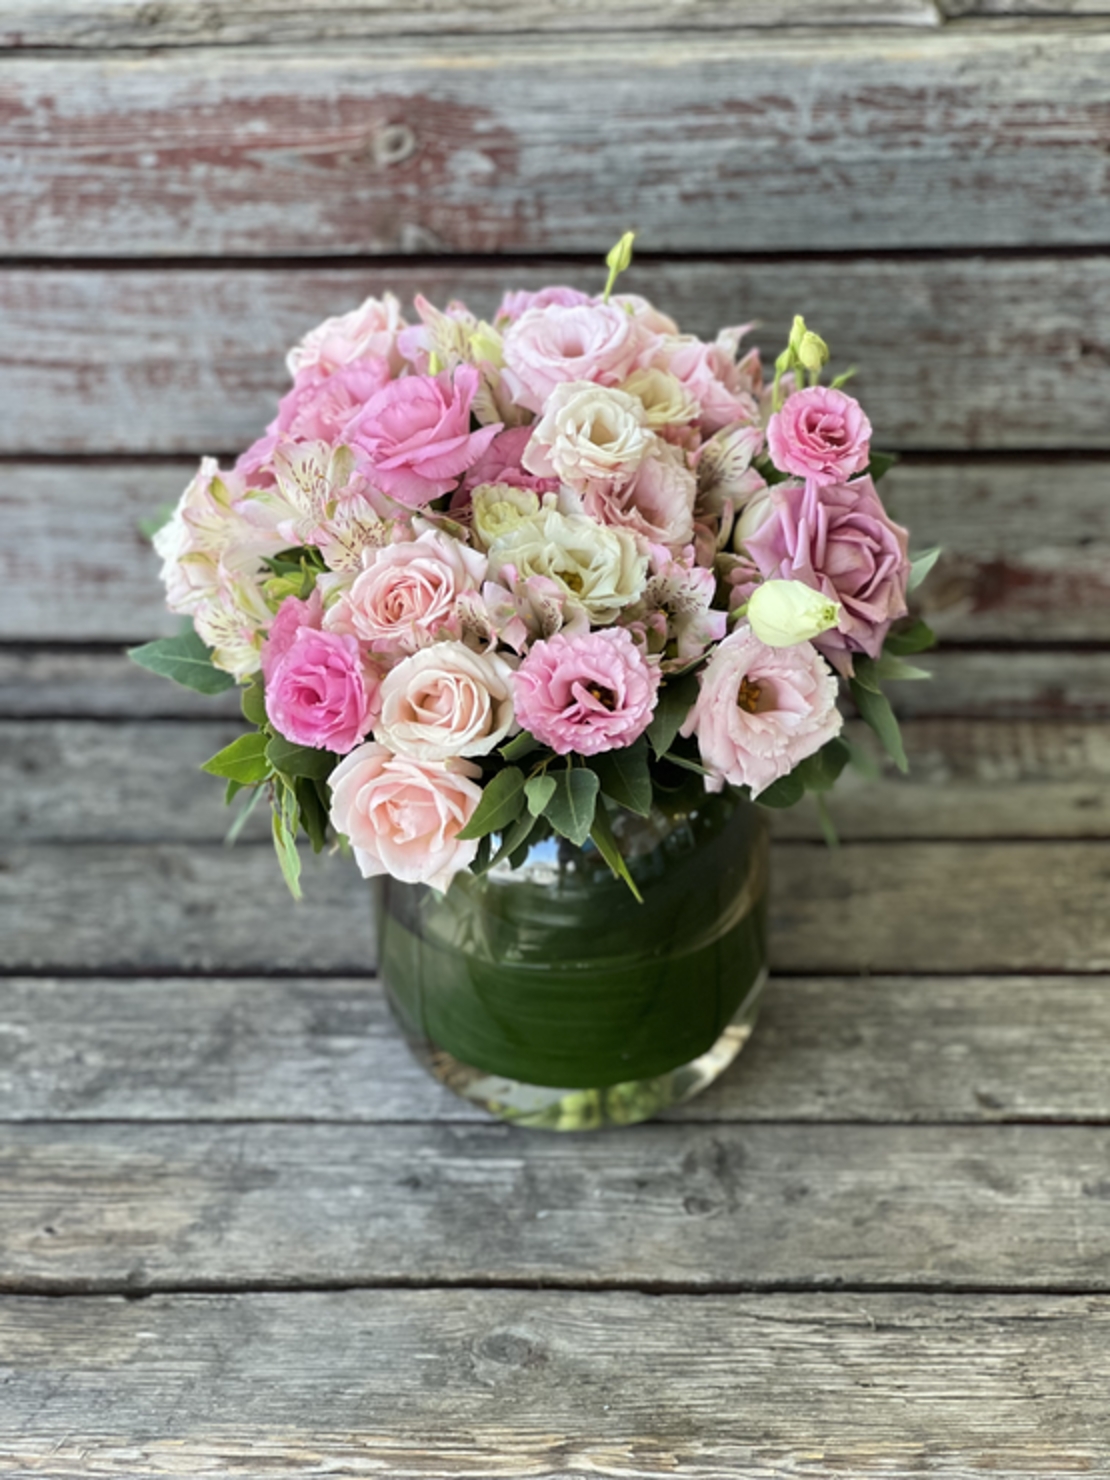 Pink flower arrangement in a vase